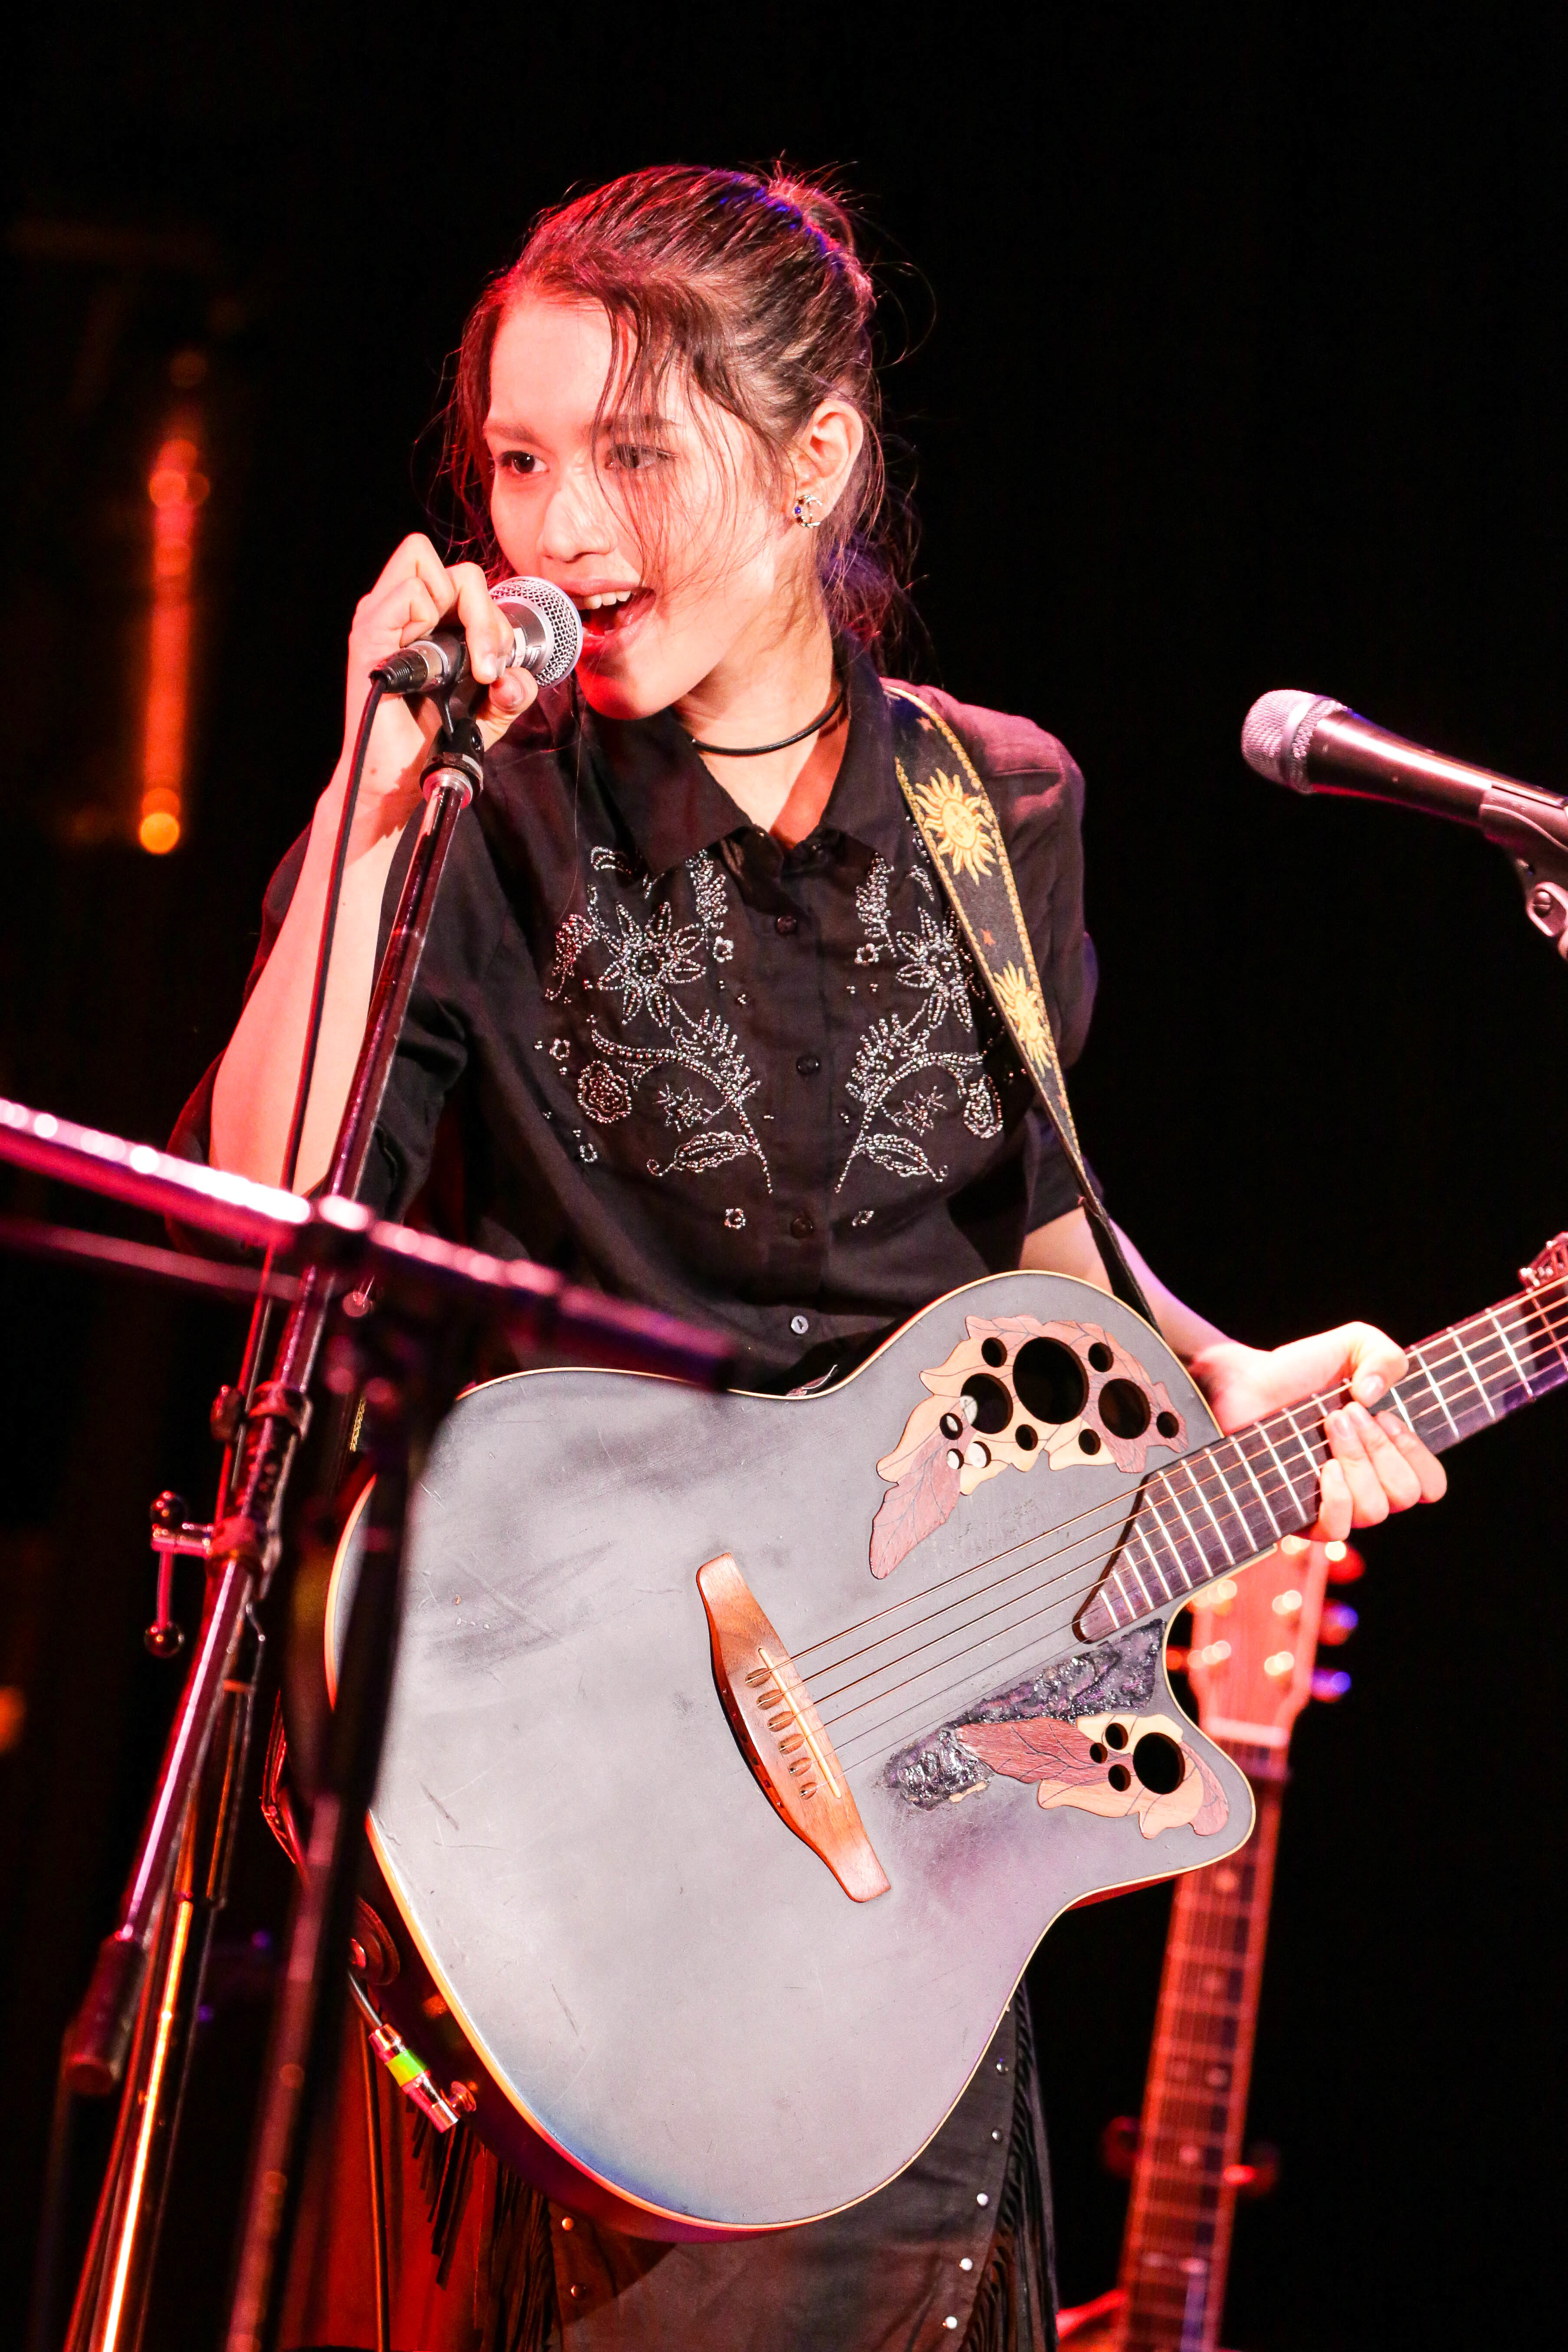 Sing N Play 卓越した歌とギタープレイで魅了した女性若手シンガーanlyとreiが共演した大阪の夜 Spice エンタメ特化型情報メディア スパイス